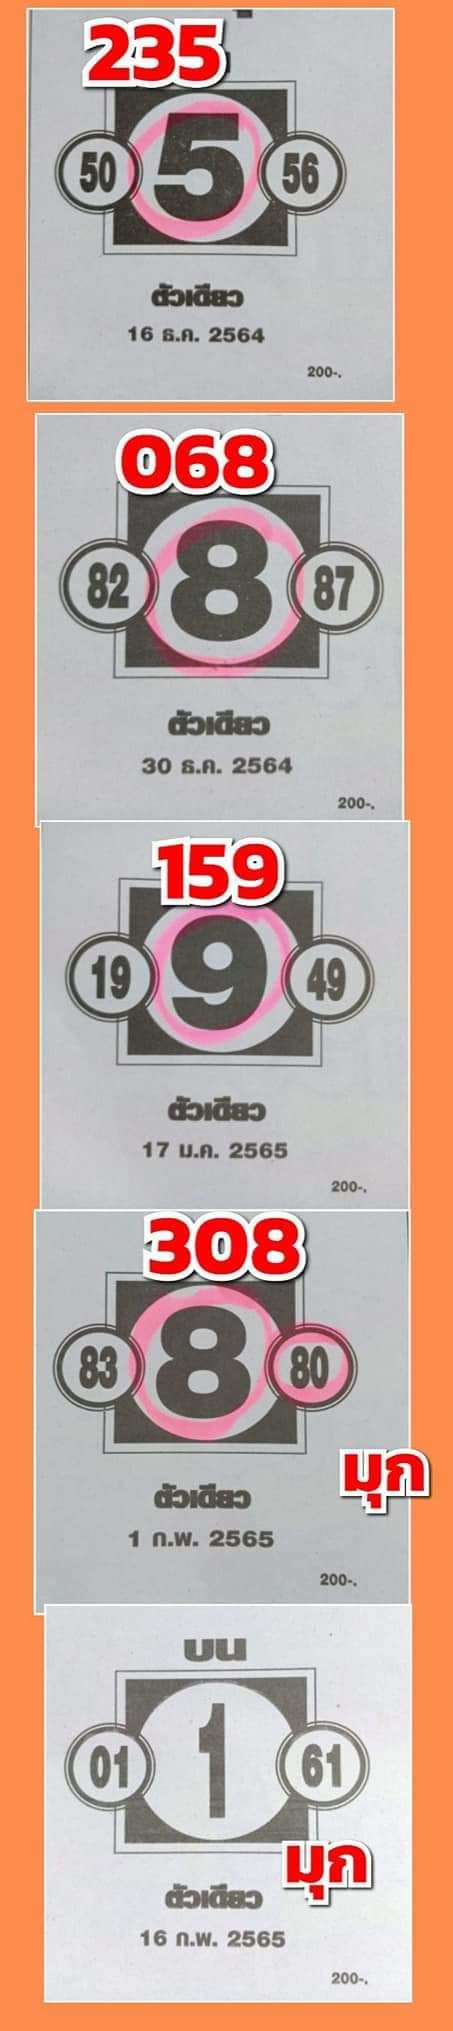 Mr-Shuk Lal Lotto 100% Free 16-02-2022 - Page 6 3602cc10